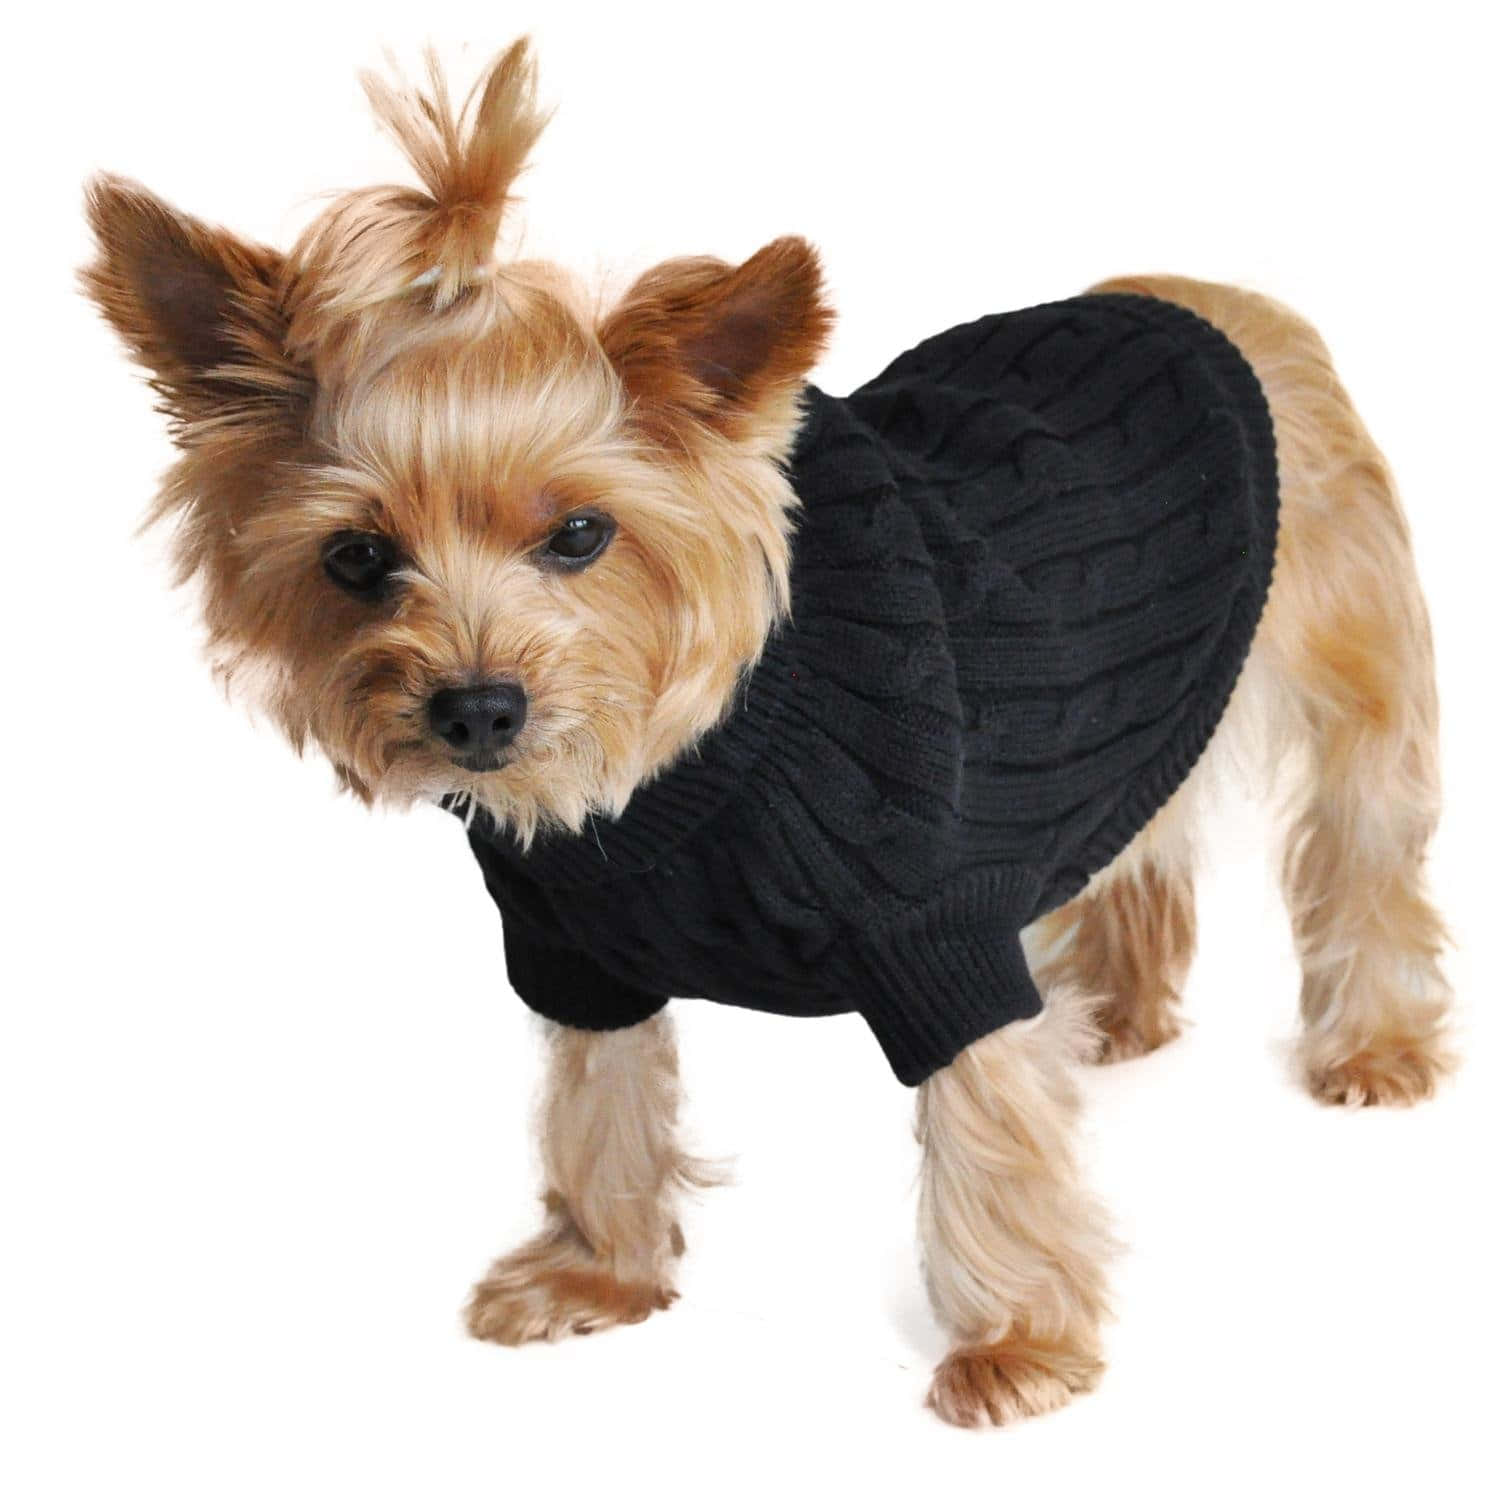 Adorable Dog Wearing A Warm Winter Jacket Wallpaper